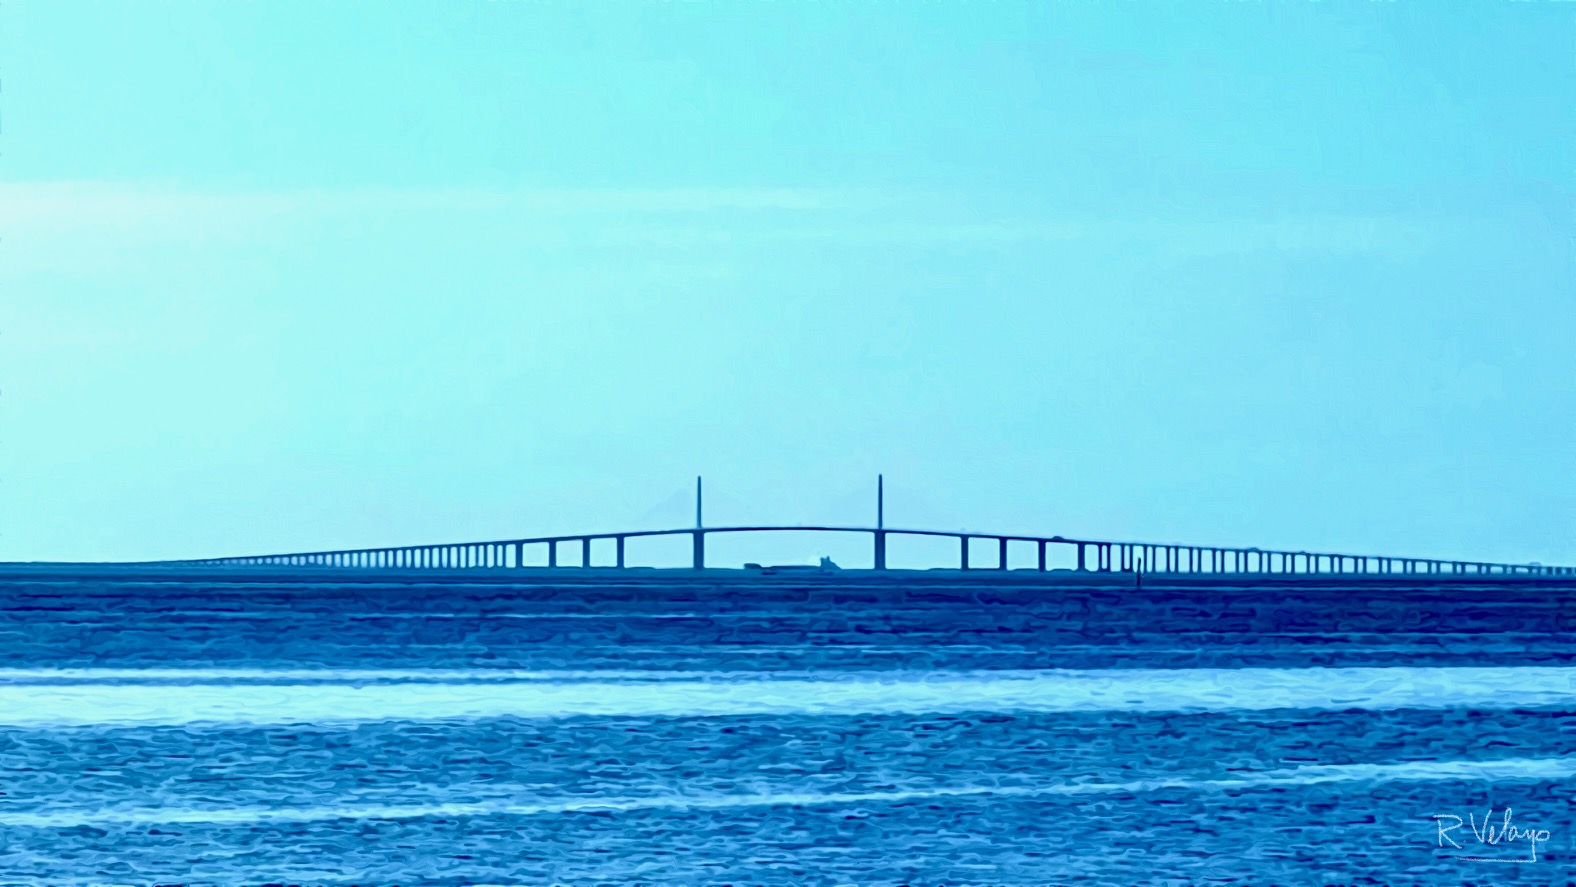 "VIEW OF SUNSHINE SKYWAY BRIDGE FROM BAY VISTA PARK" [Created: 2/28/2022]